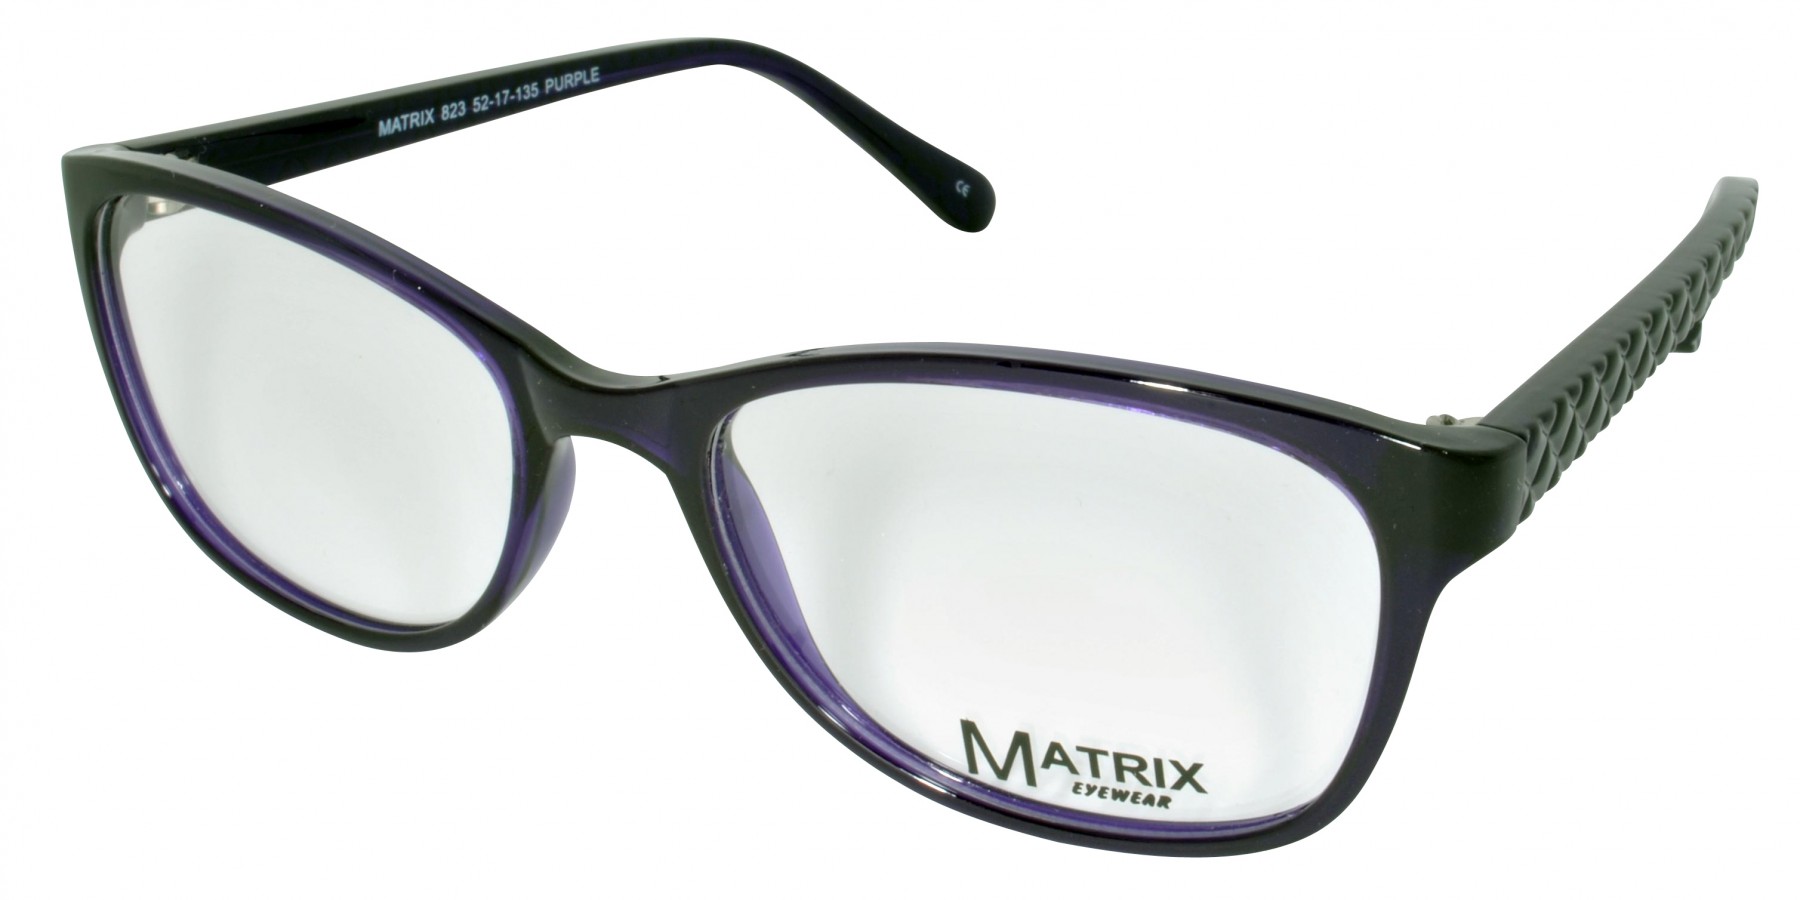 Matrix 823 Prescription Glasses